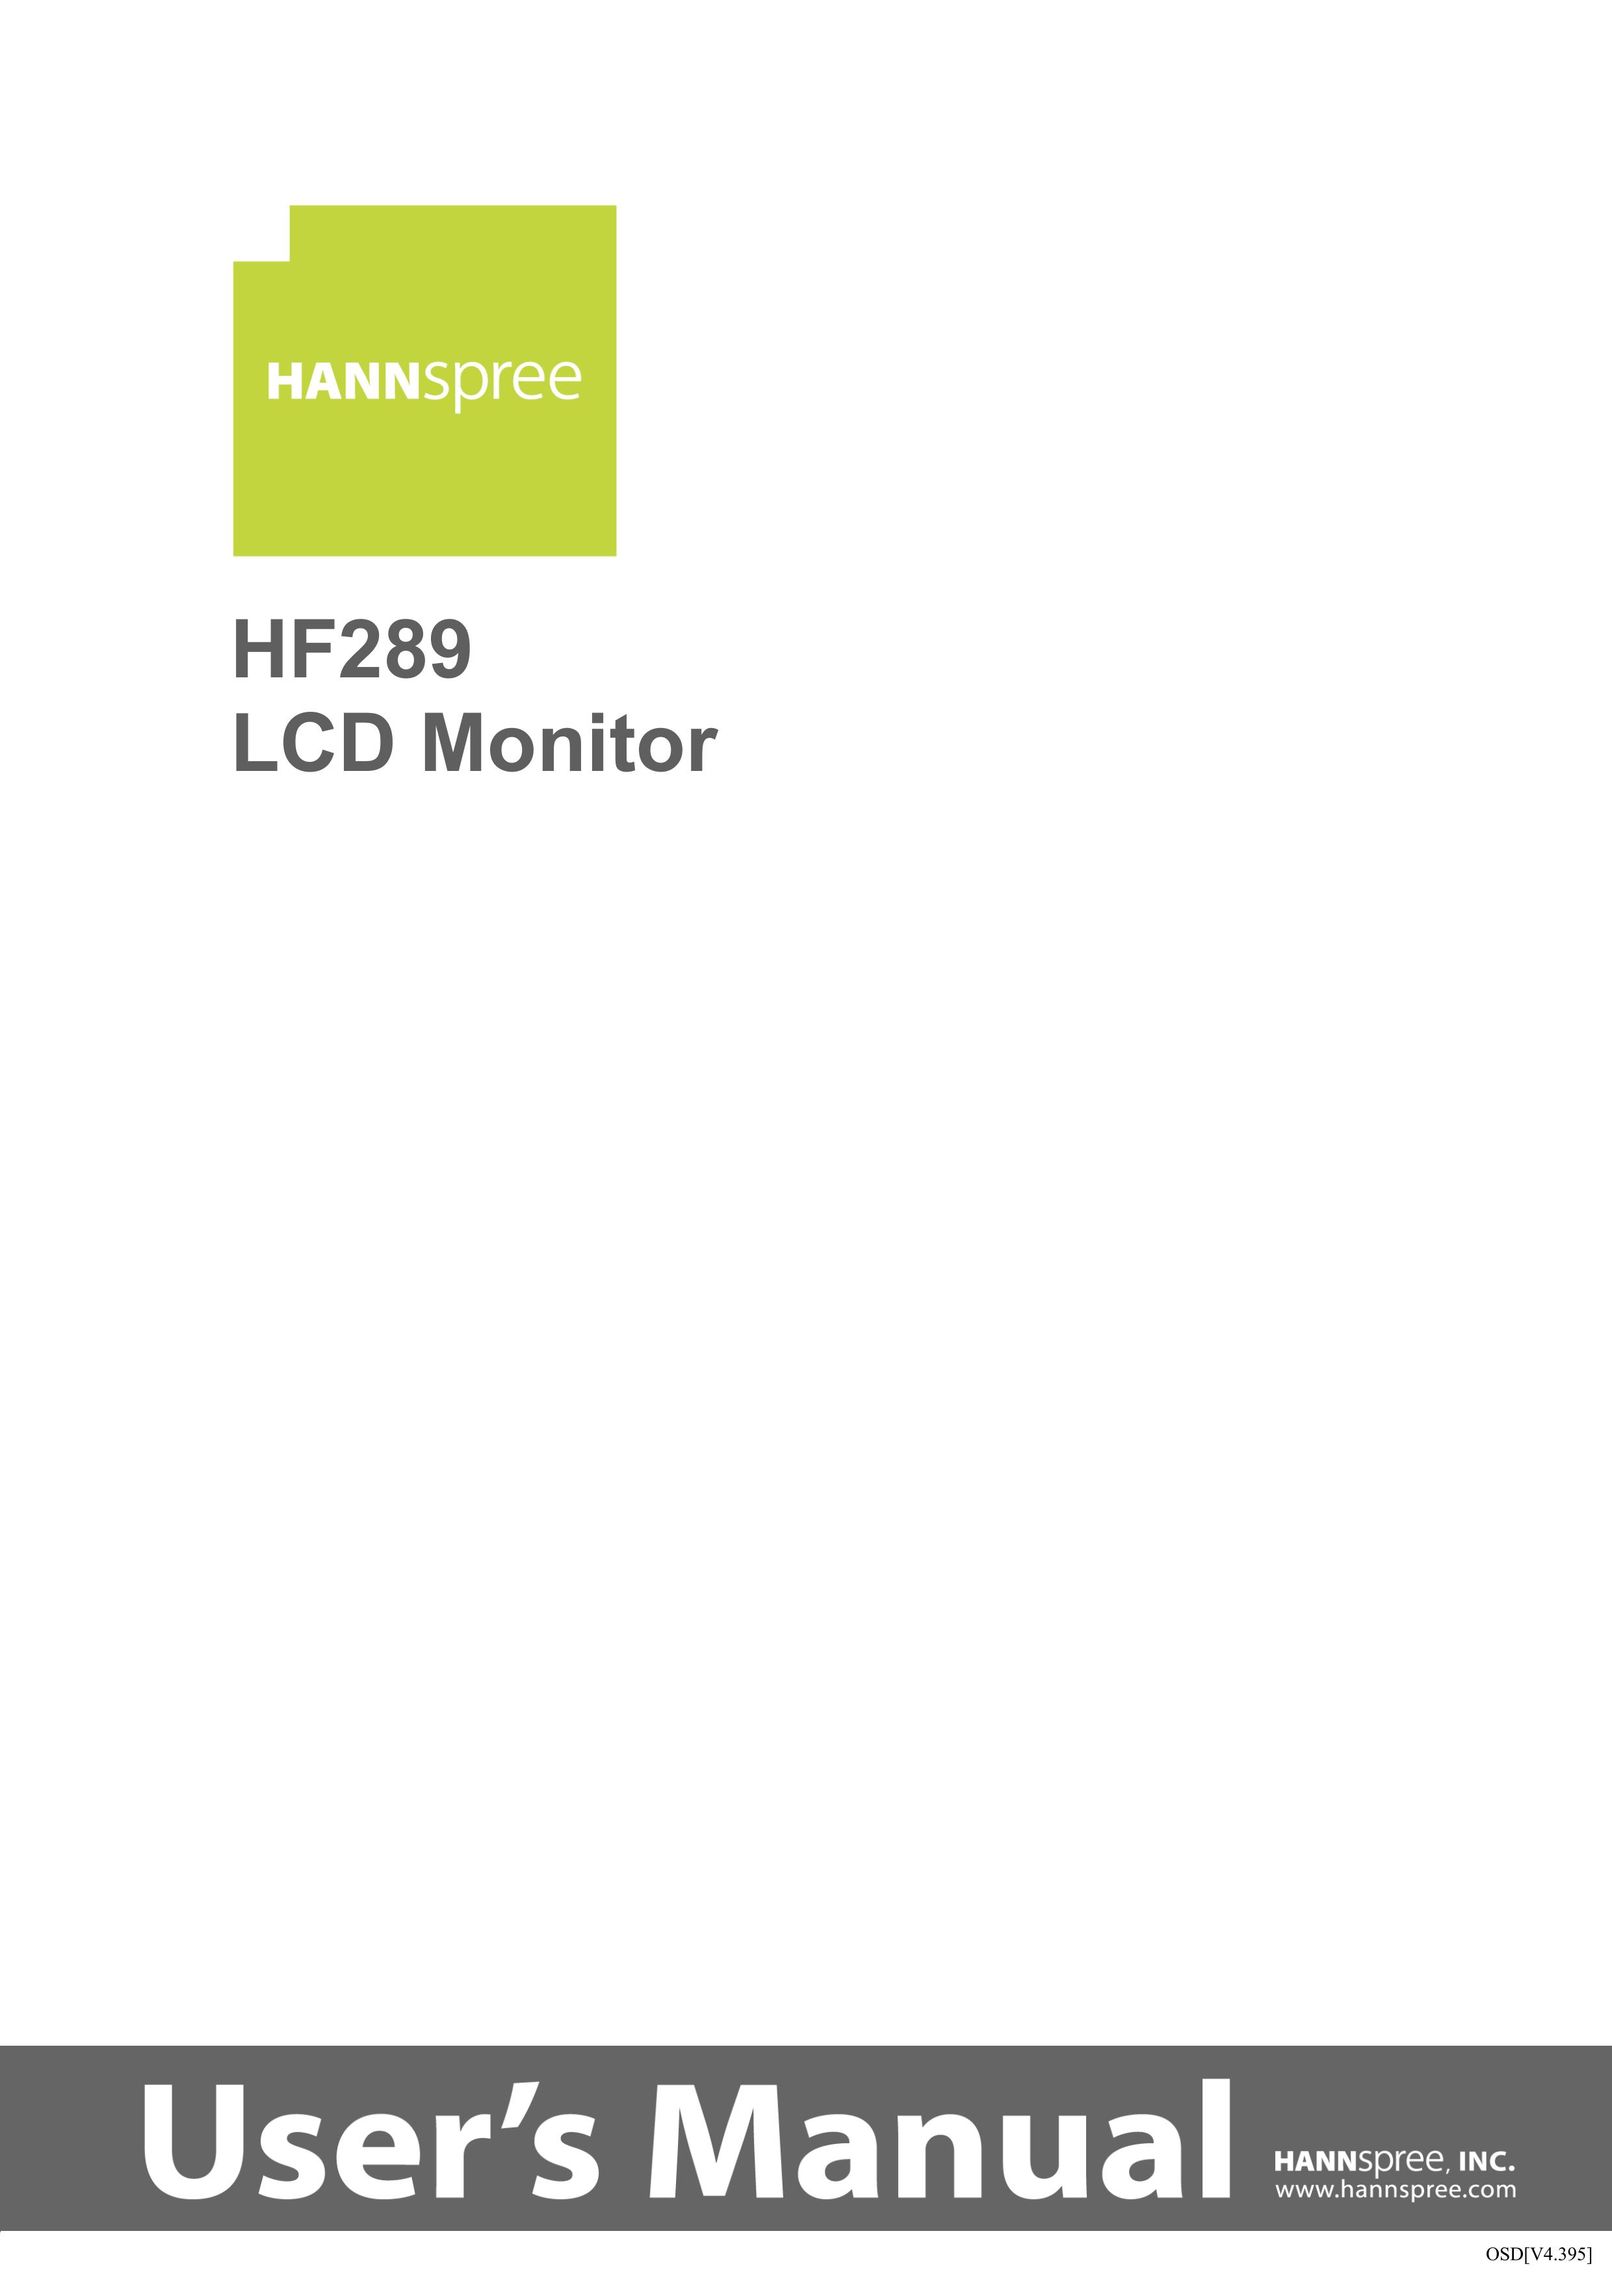 HANNspree HF289 Car Video System User Manual